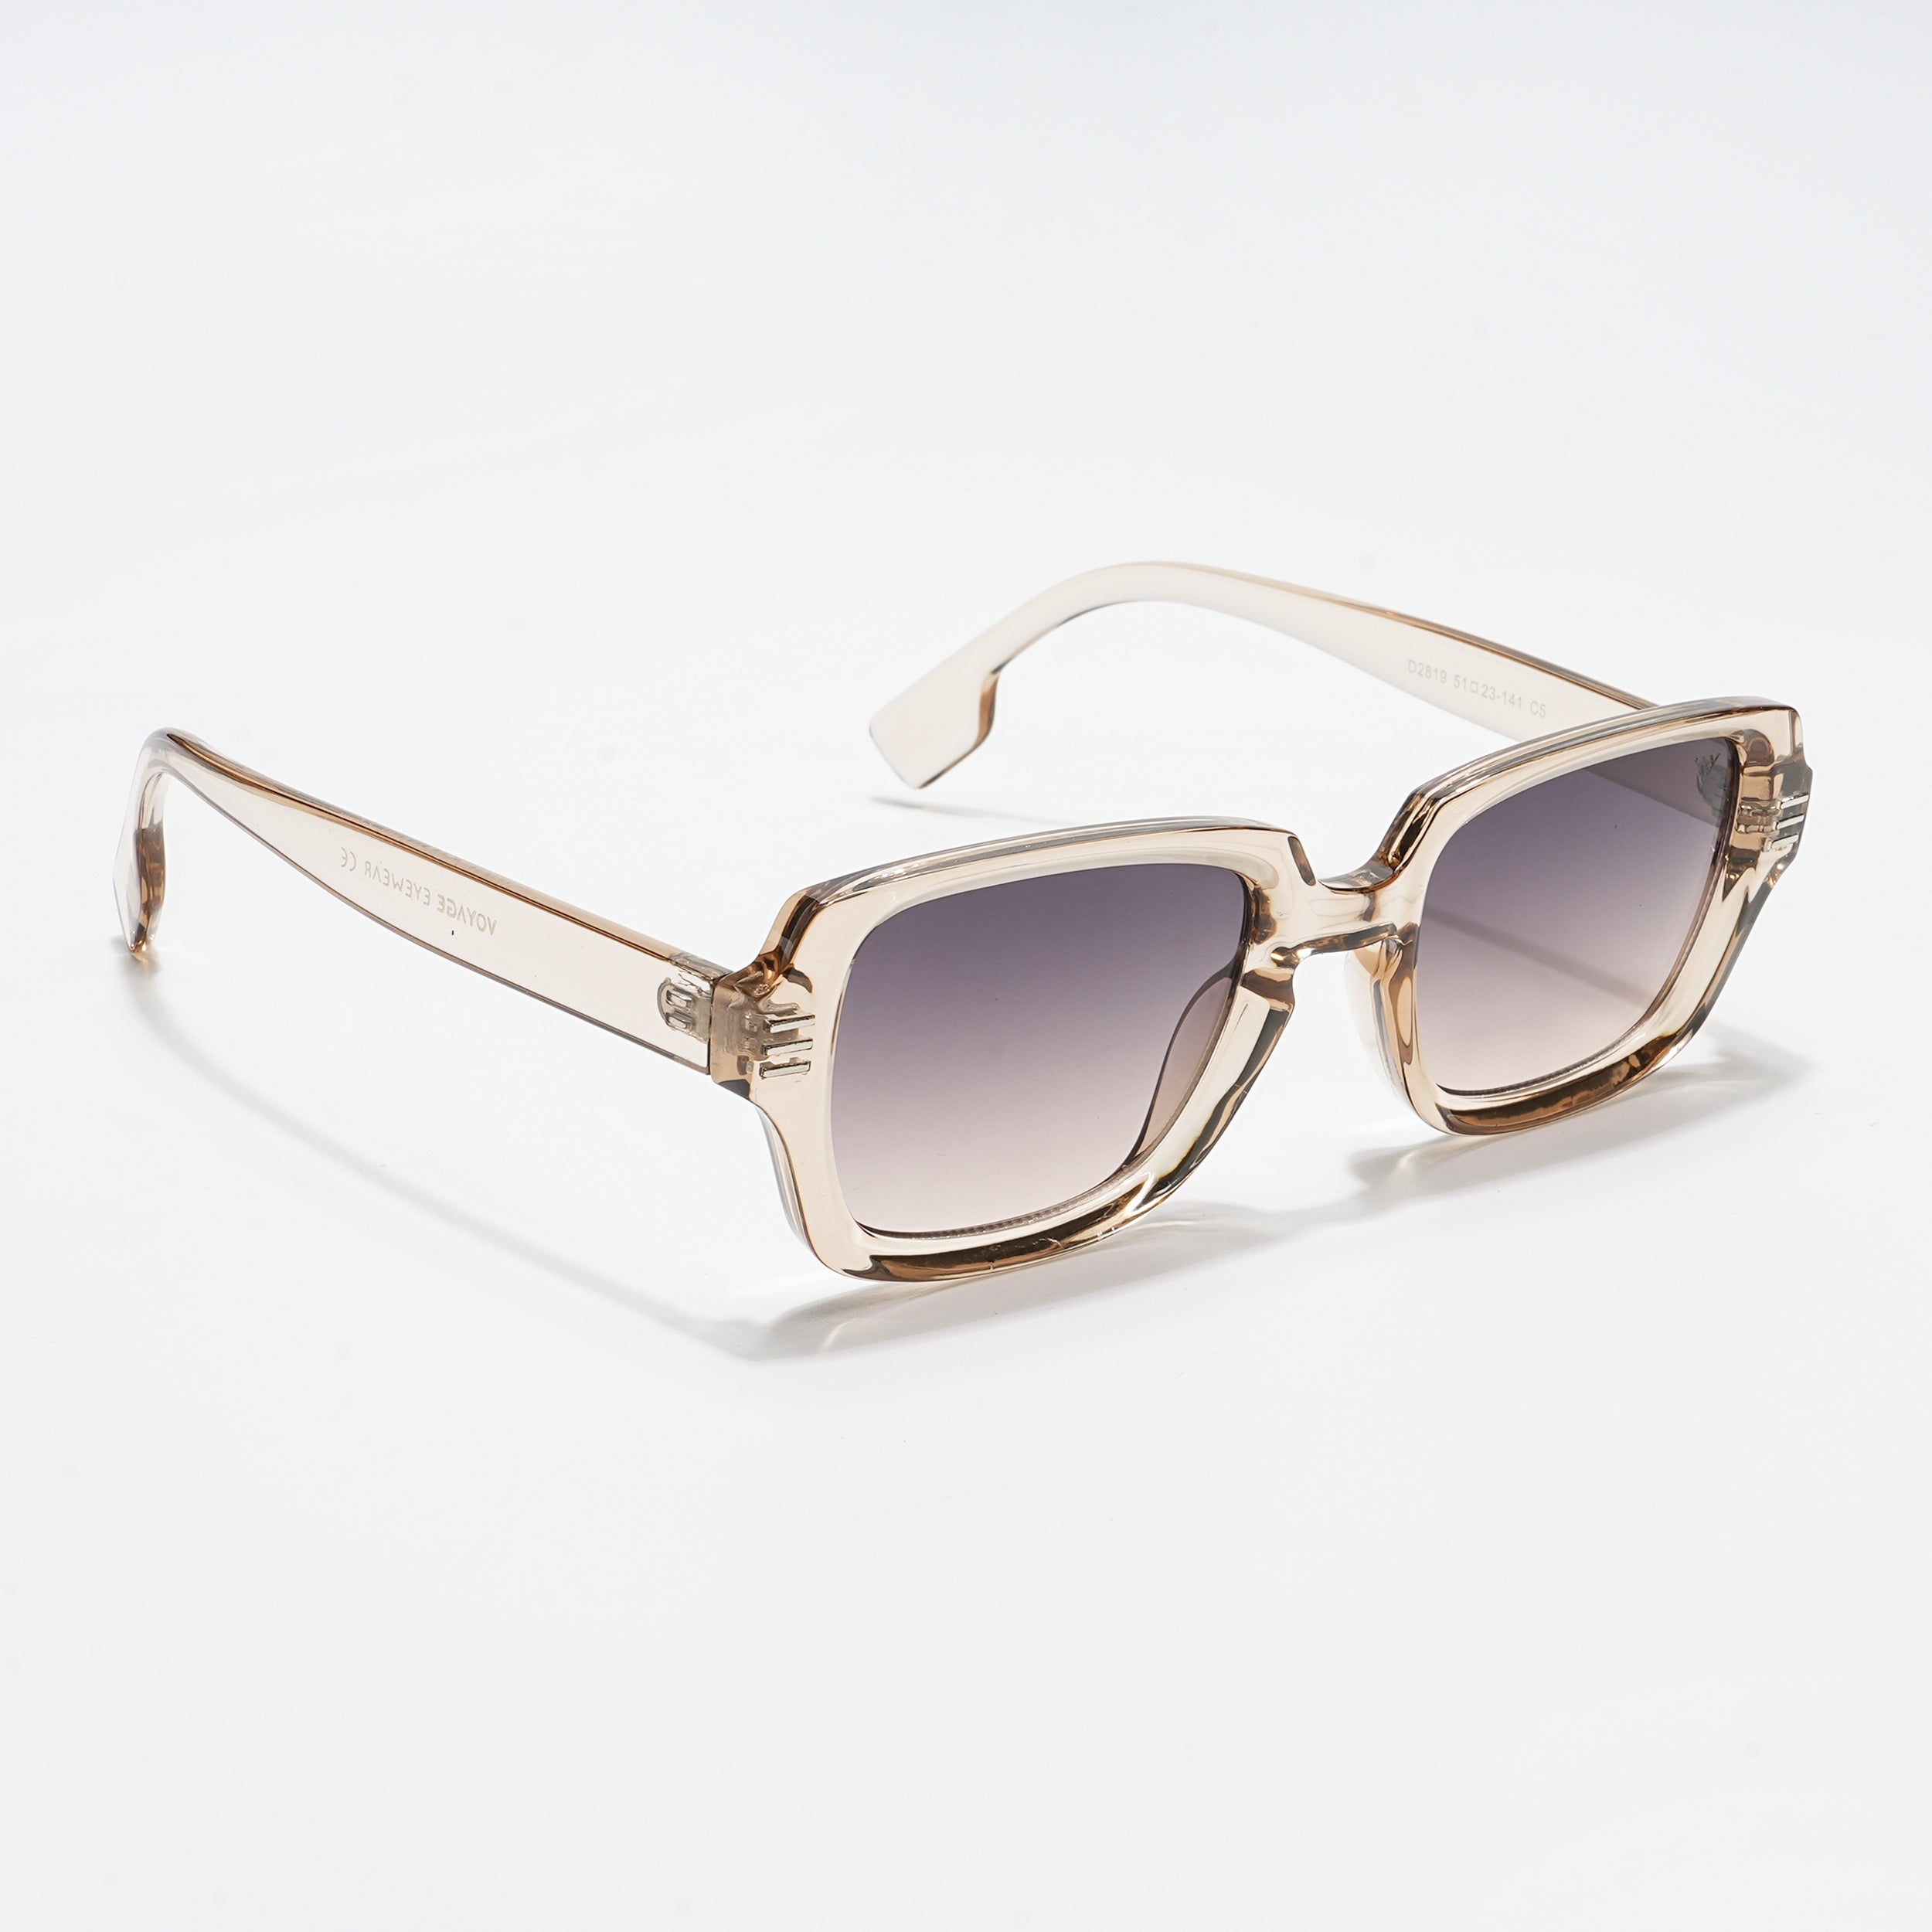 Voyage Grey & Light Brown Gradient Wayfarer Sunglasses MG3700